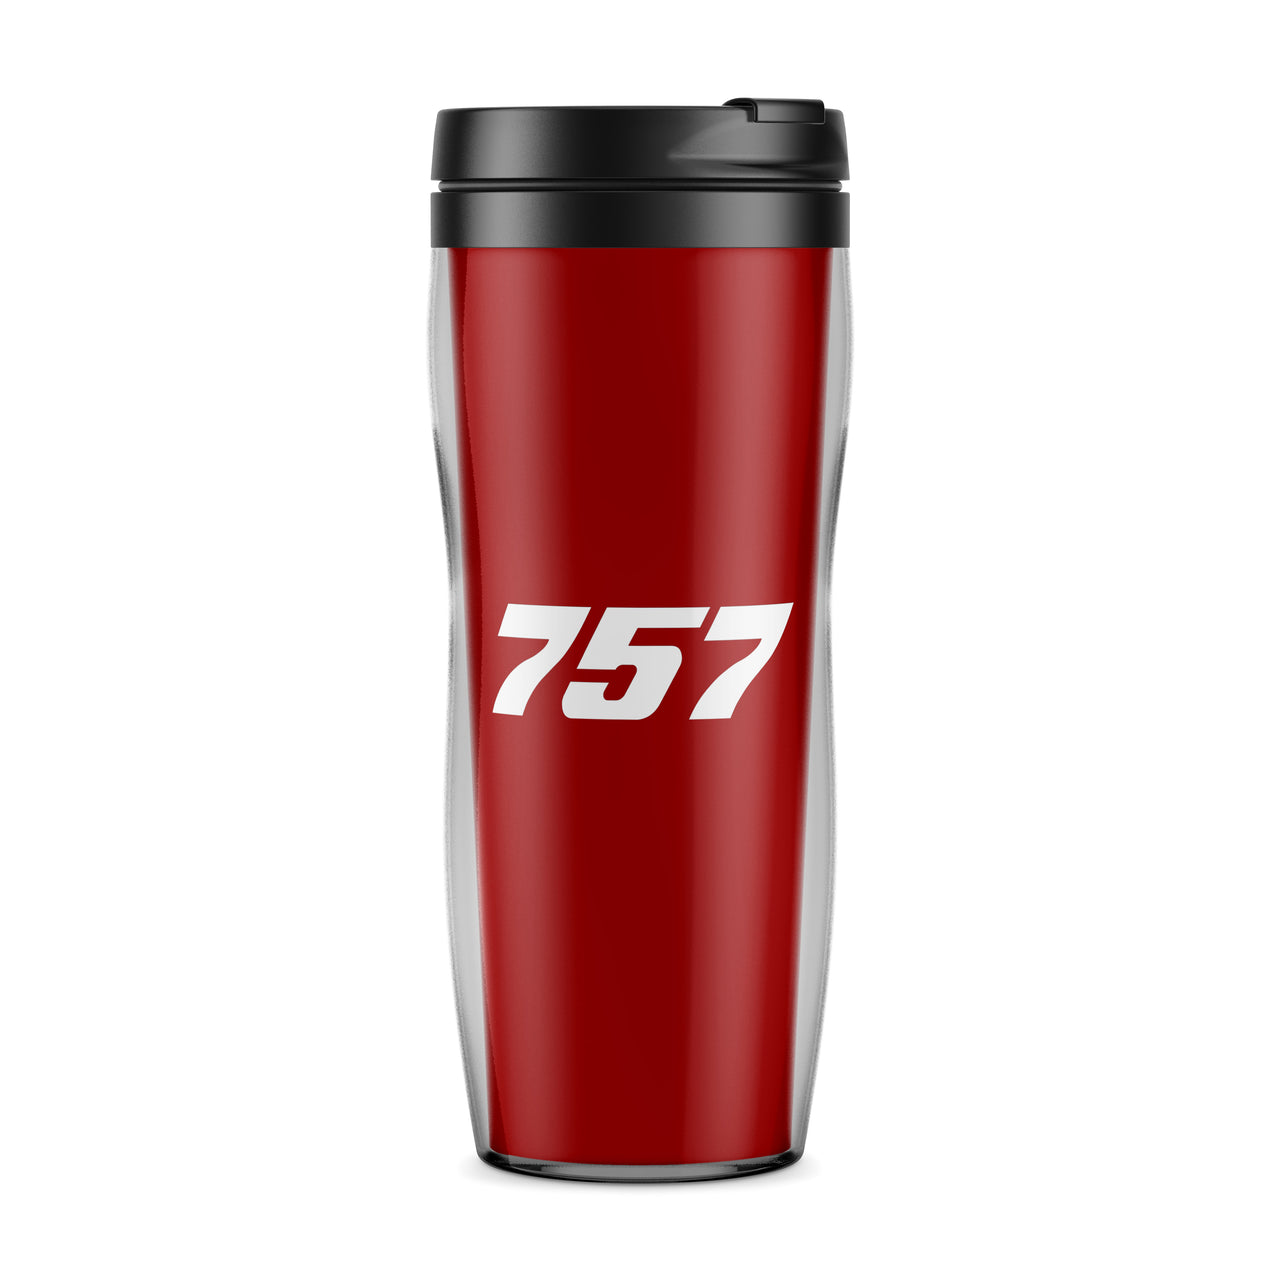 757 Flat Text Designed Travel Mugs